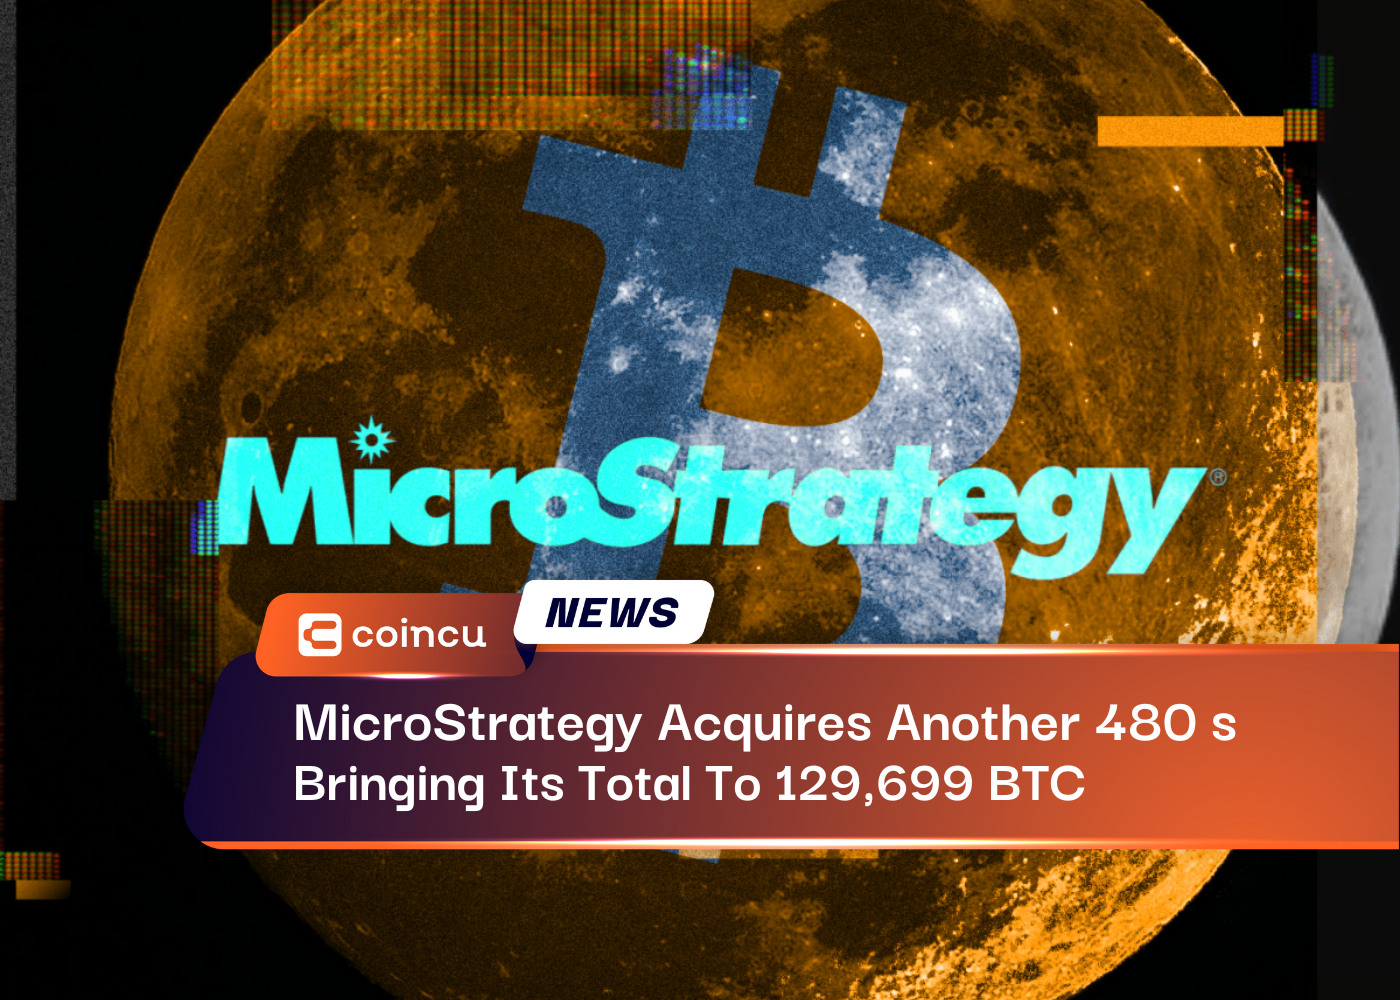 MicroStrategy adquiere otros 480 s